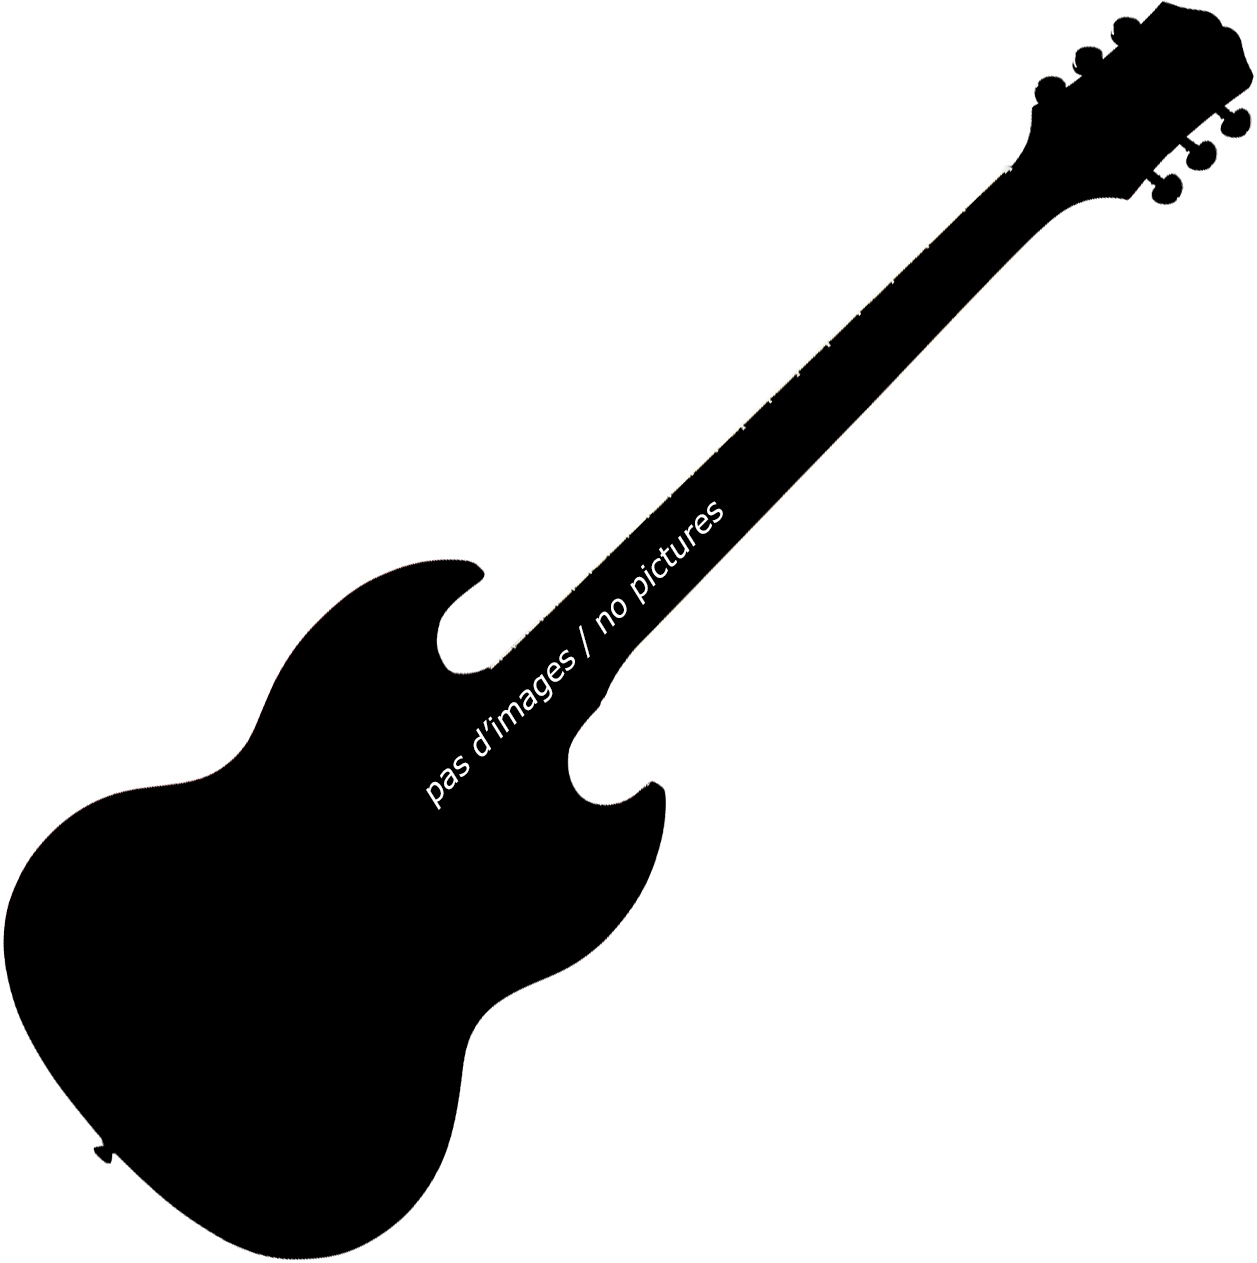 Epiphone Sg Custom 2h Ht Eb - Ebony - Double cut electric guitar - Variation 1